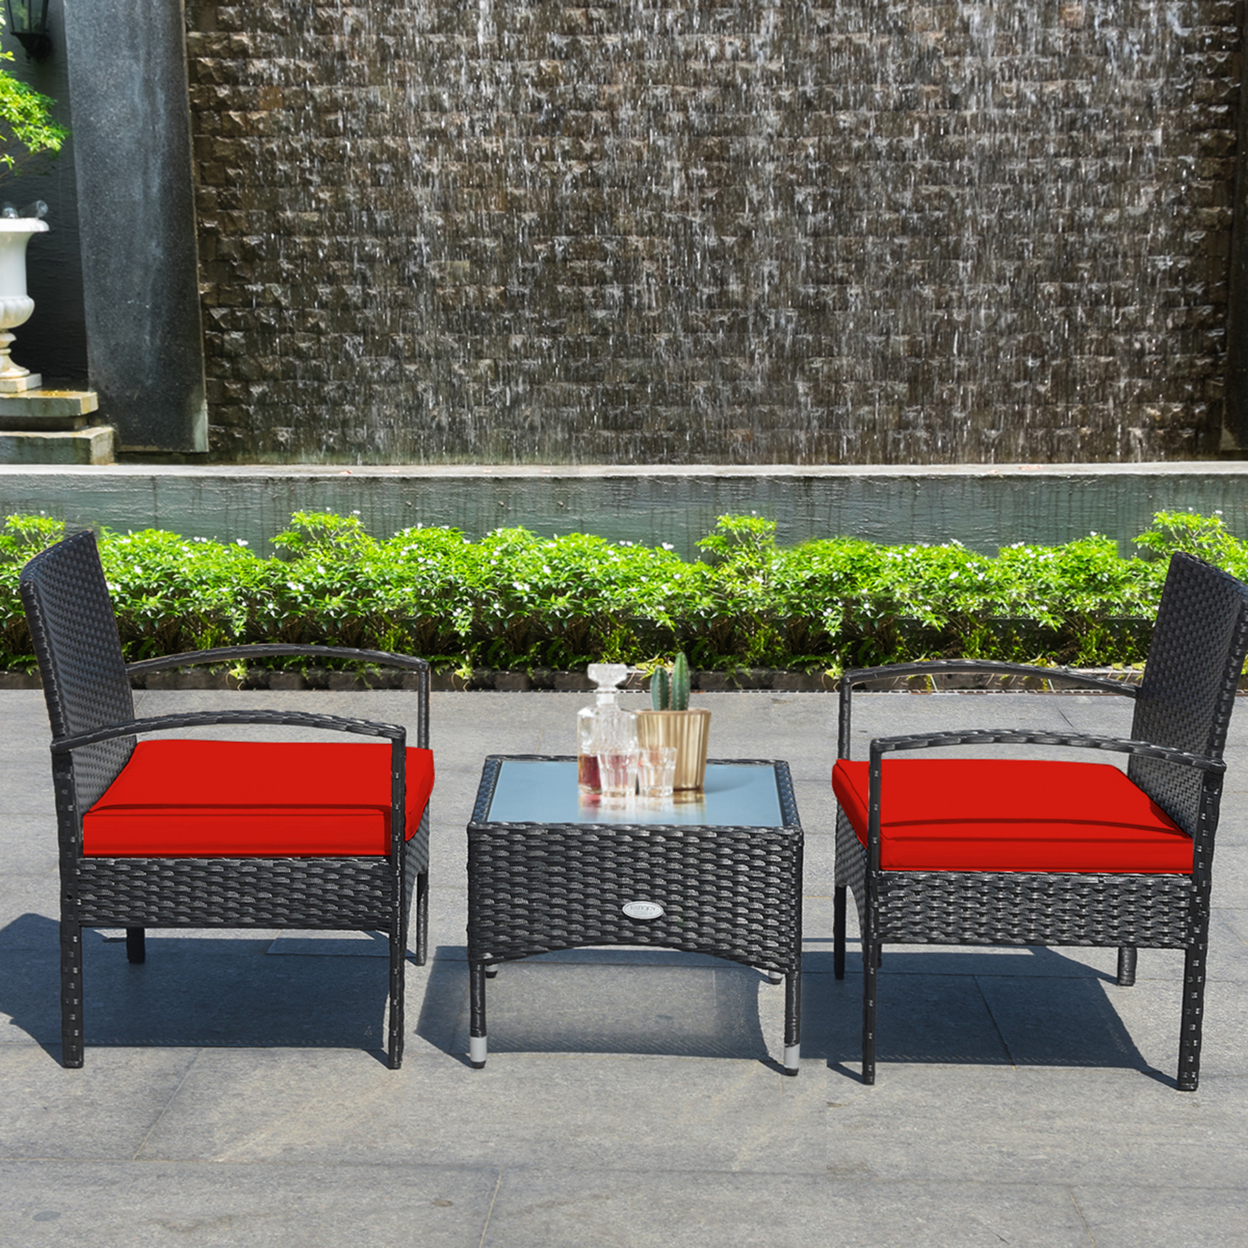 3 PCS Patio Wicker Rattan Furniture Set Coffee Table & 2 Rattan Chair W/ Cushion Red